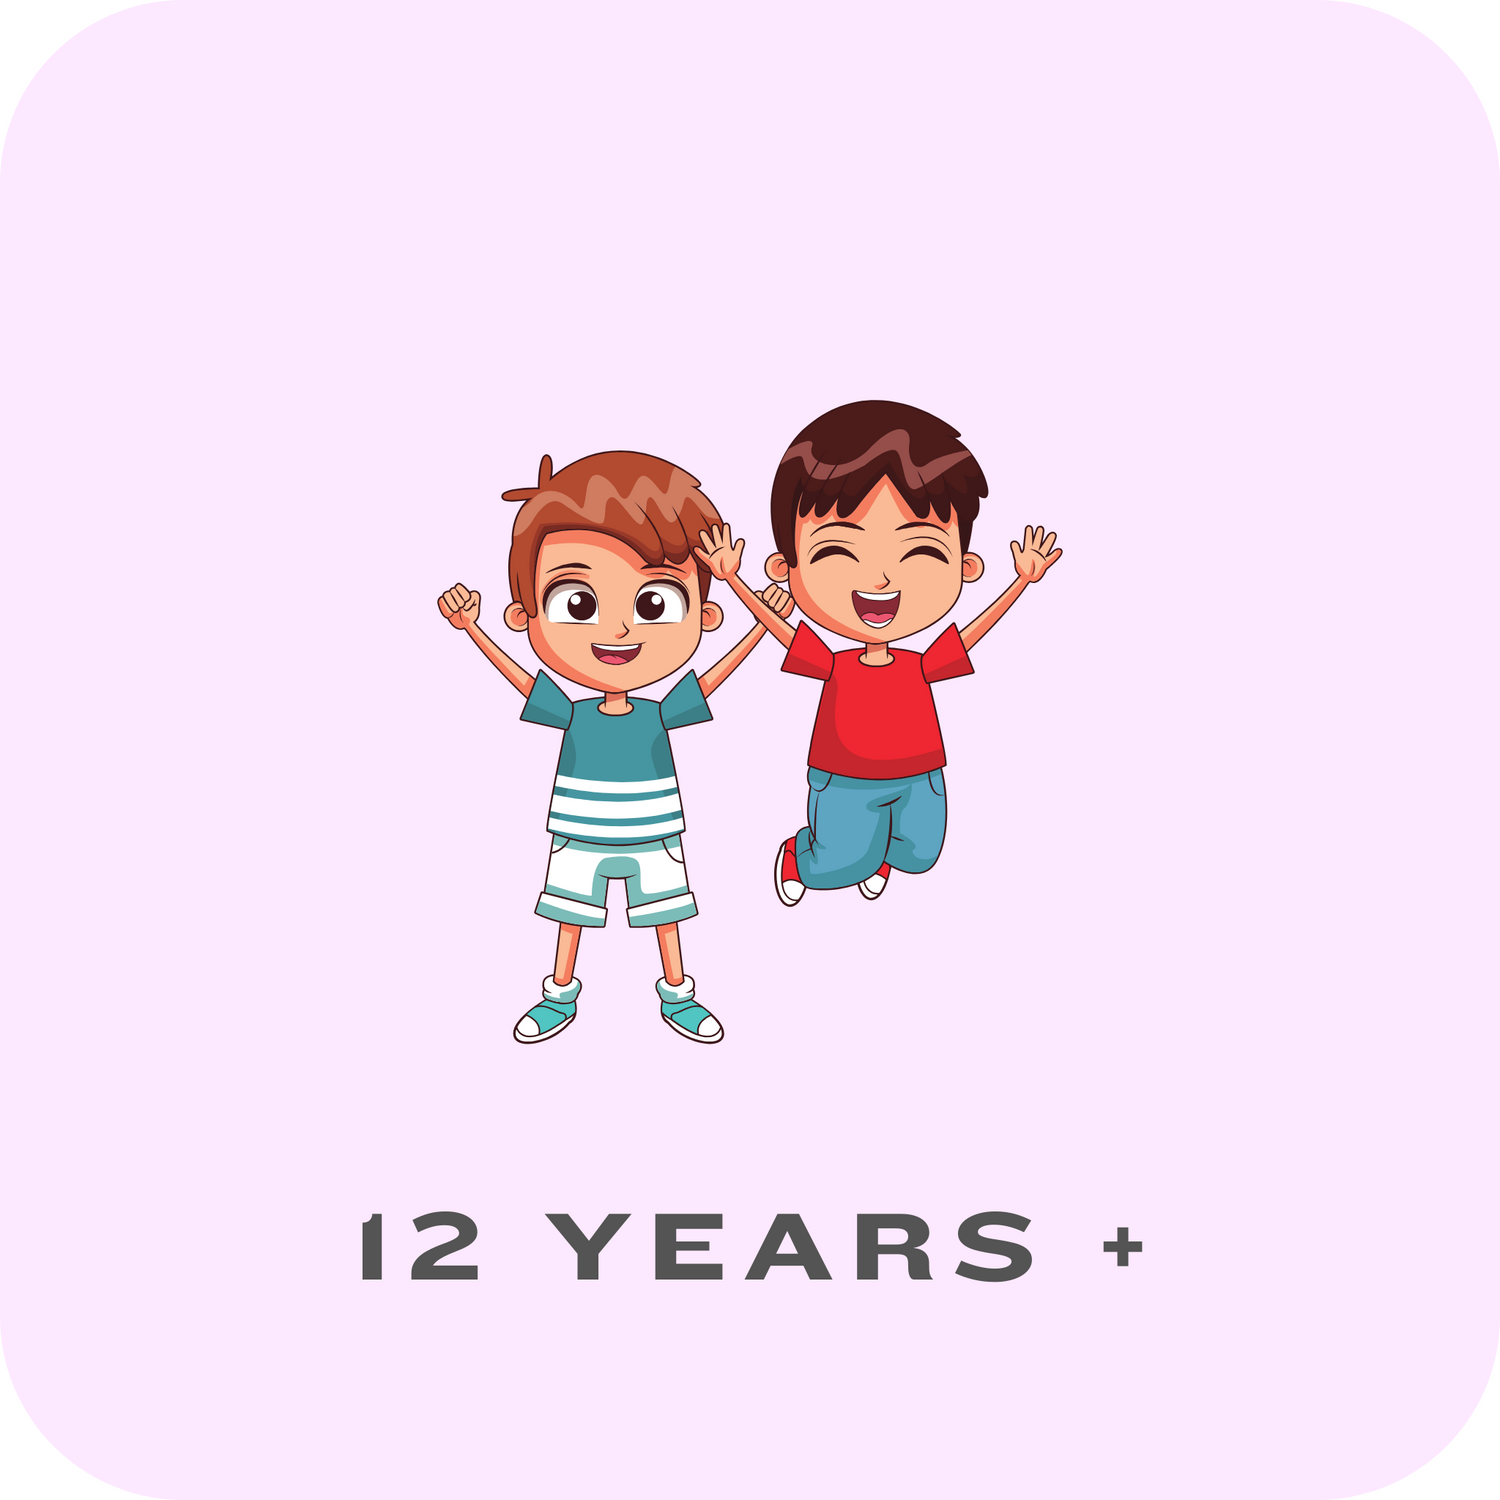 12 Years +